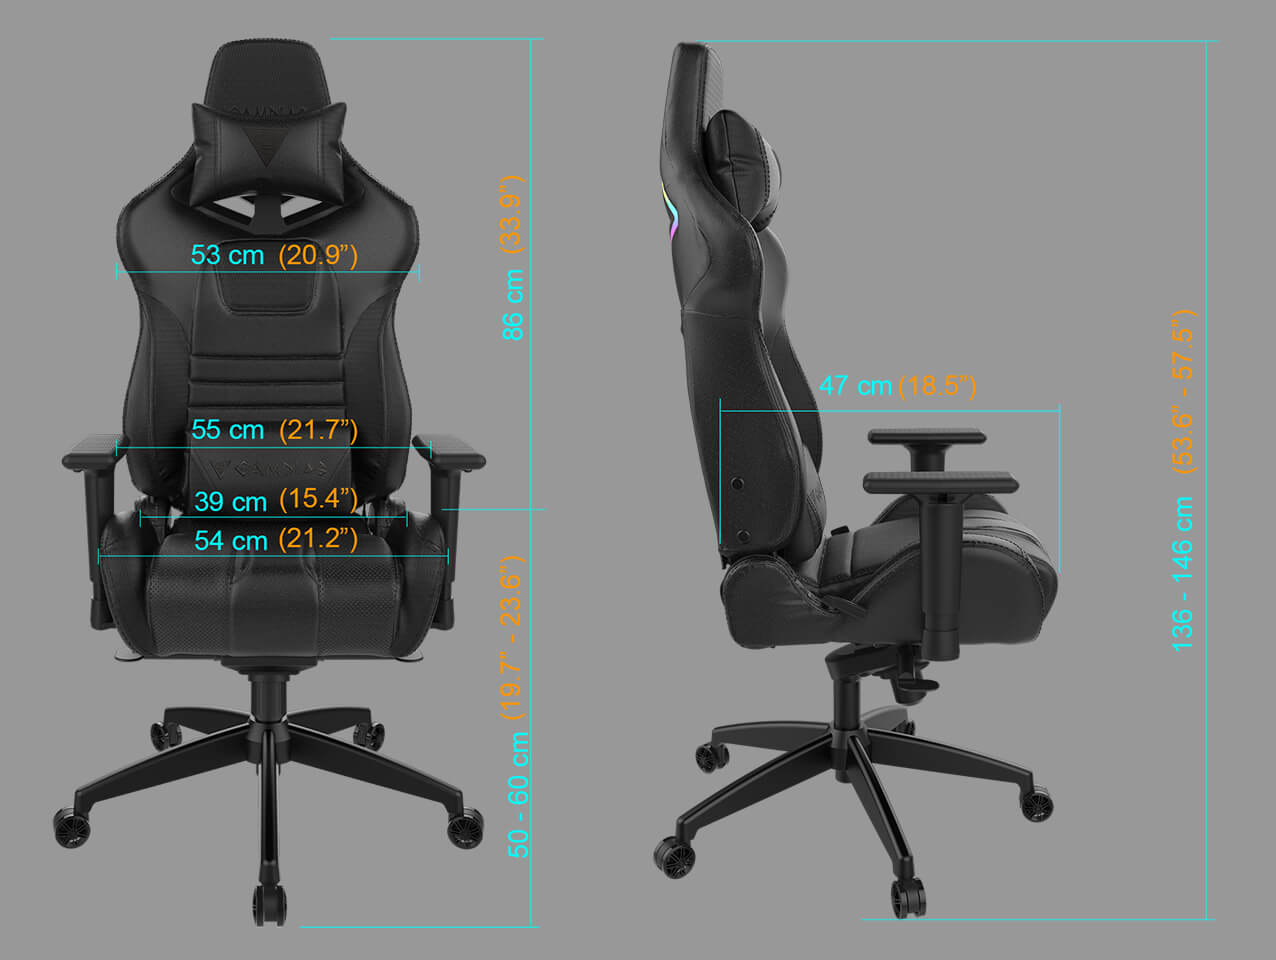 Gamdias-ACHILLES-M1A-L-Multi-function-Gaming-Chair